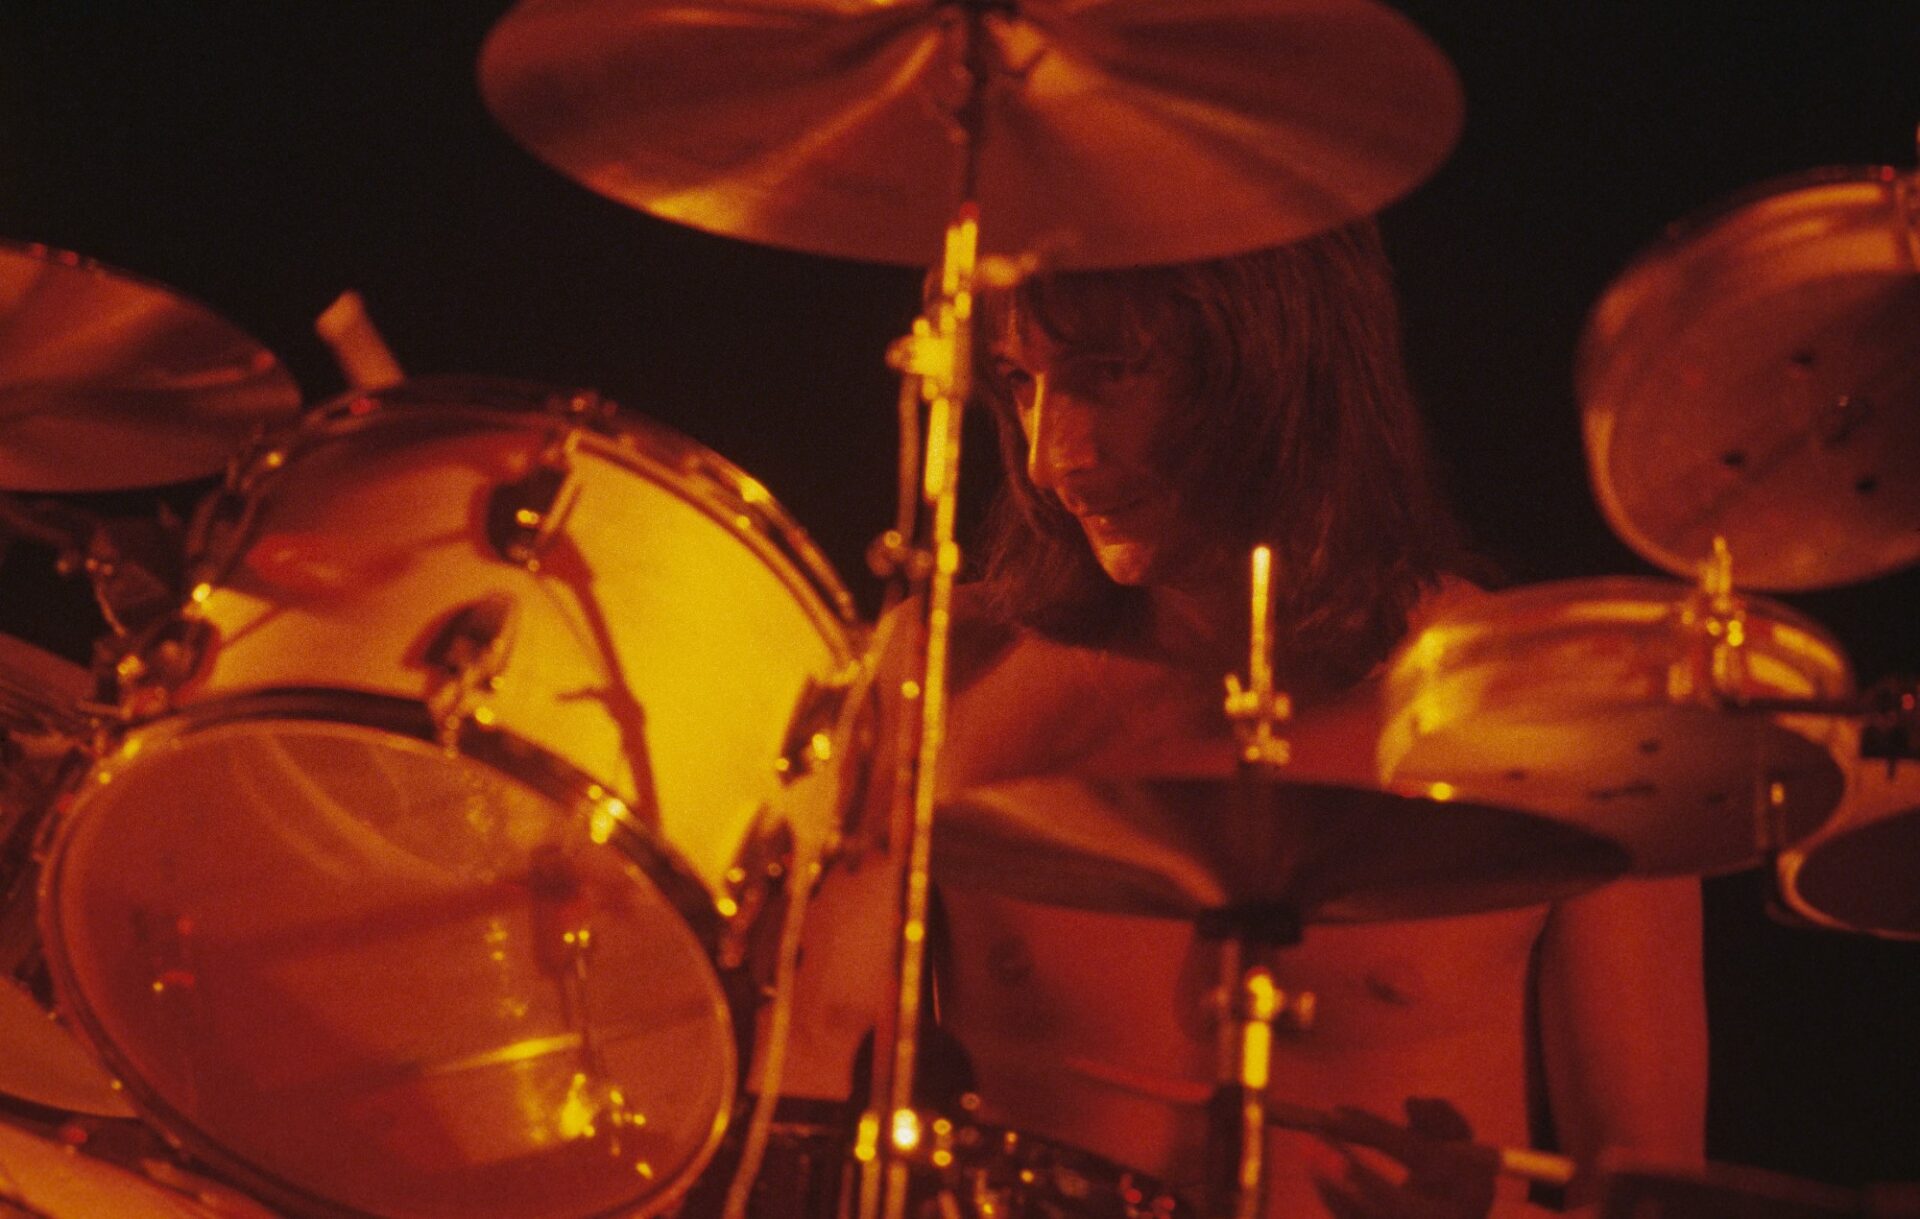 Jefferson Starship drummer John Barbata has died, age 79